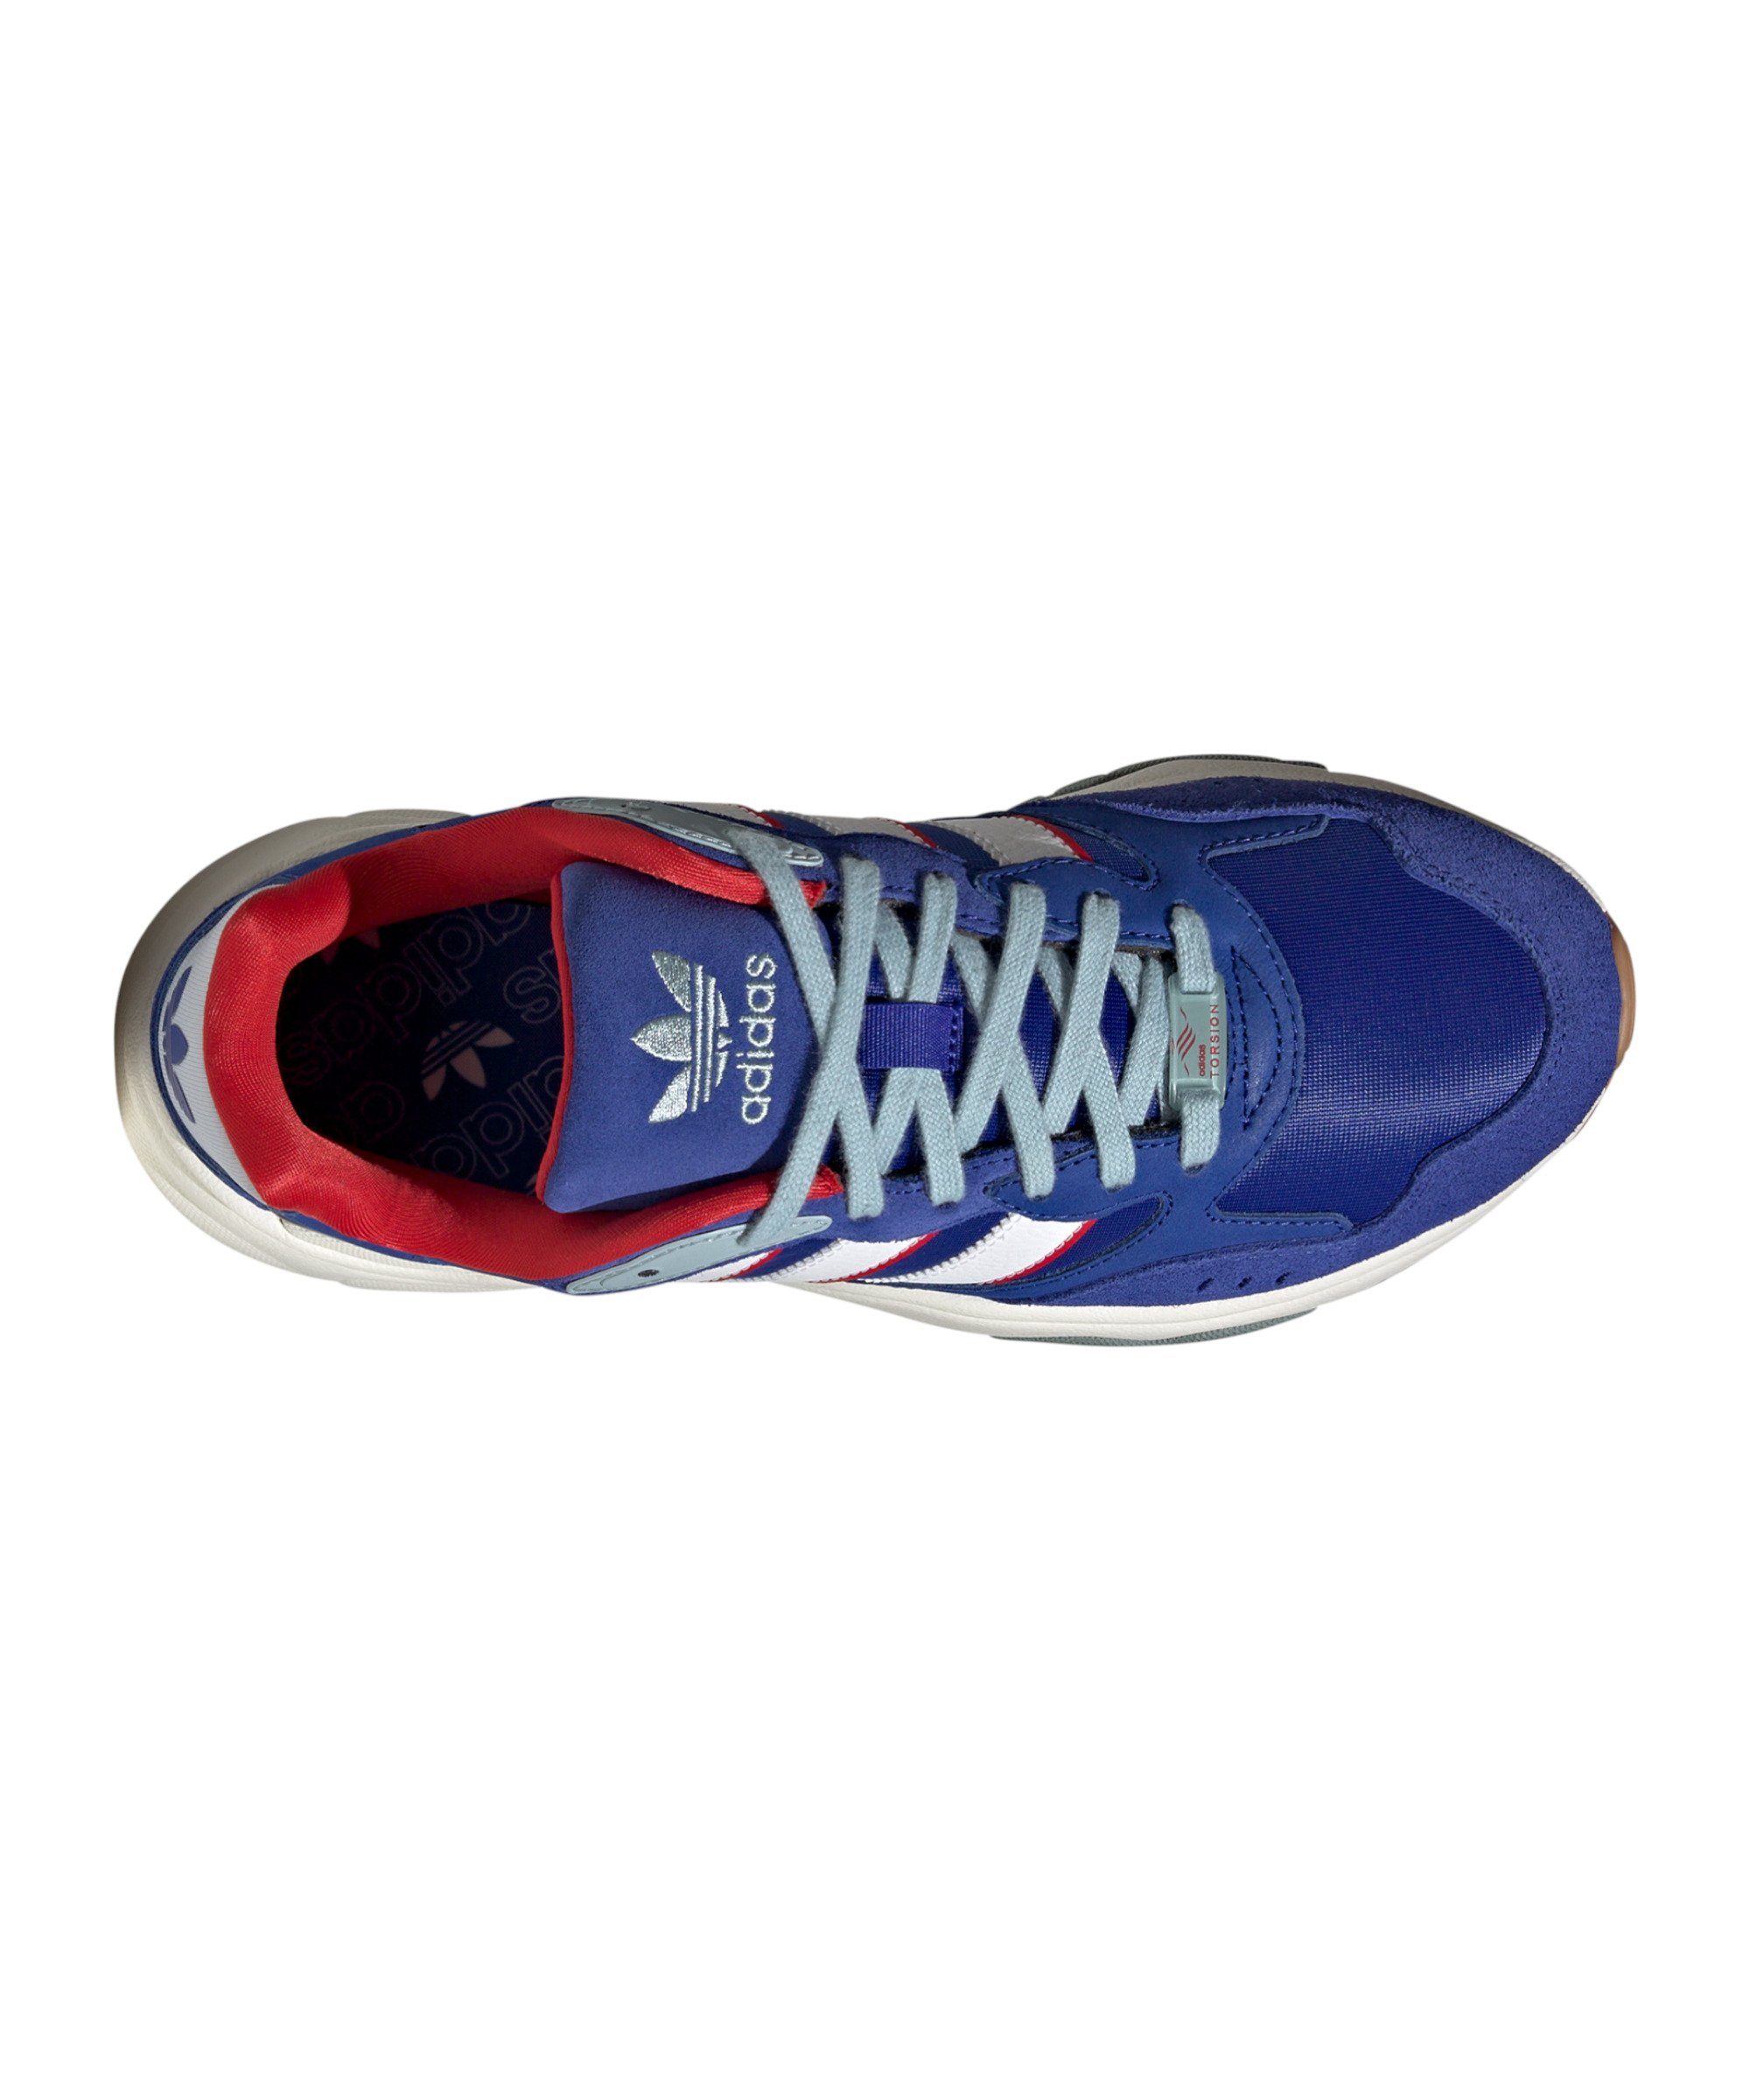 Originals adidas F90 blauweissrot Retropy Sneaker